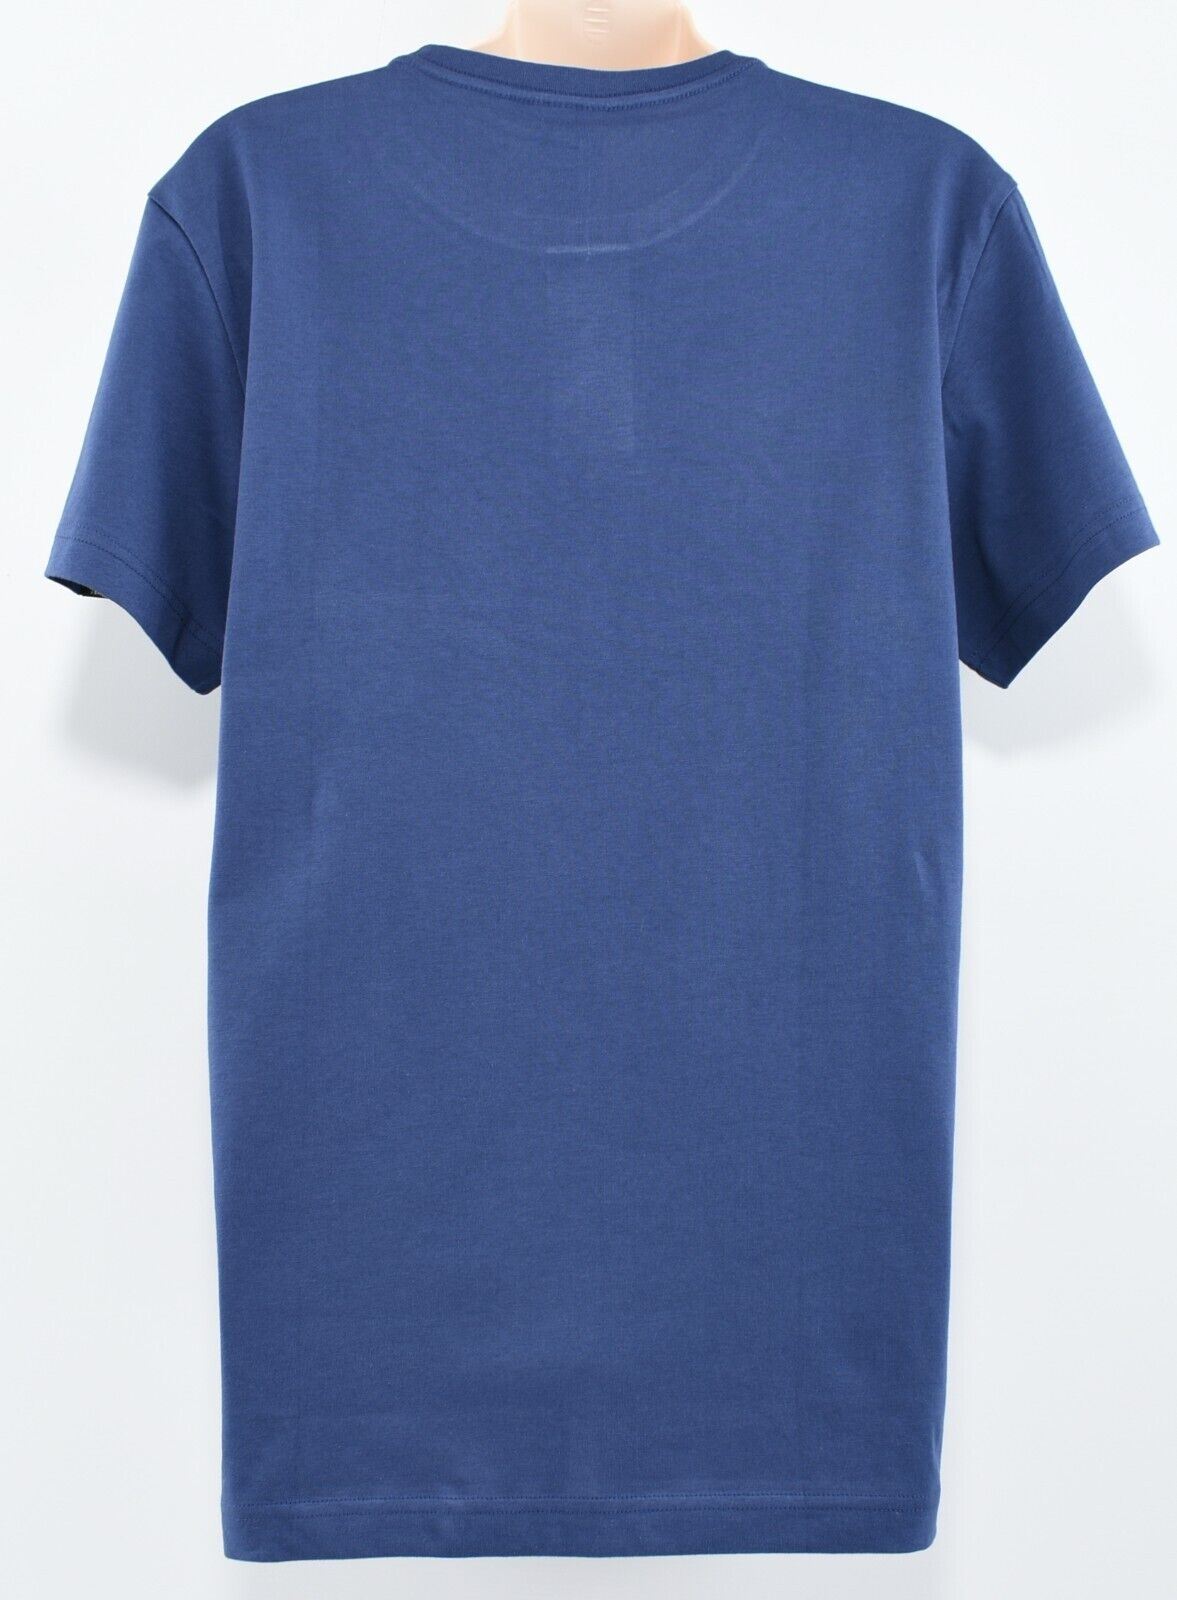 ADIDAS Women's Crew Neck Logo T-shirt, Tee, Indigo Blue, size XS (UK 4-6)